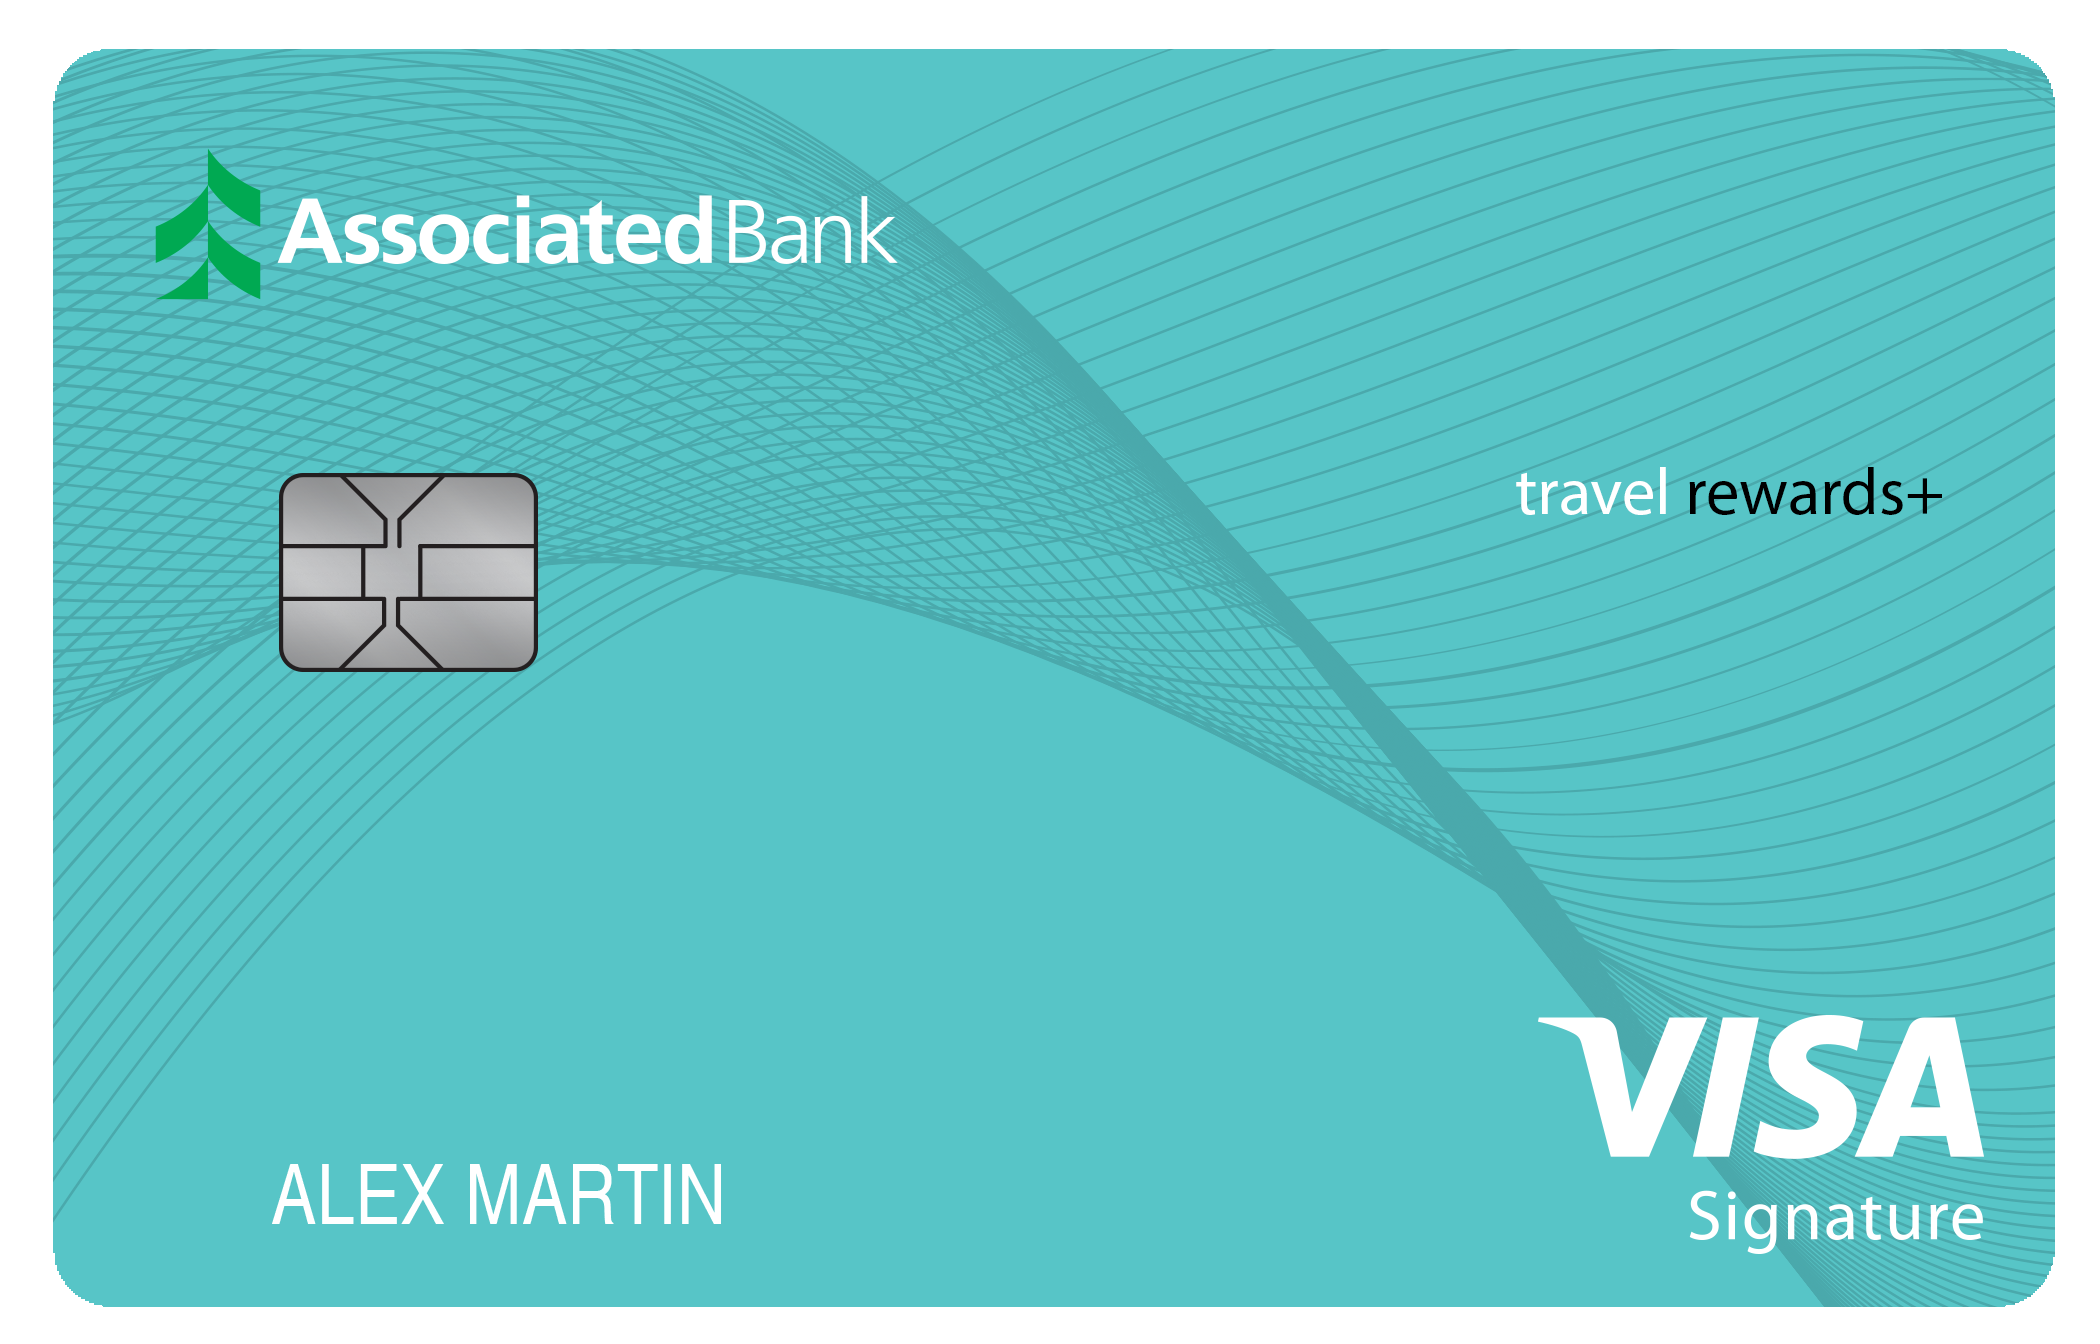 travel bank card